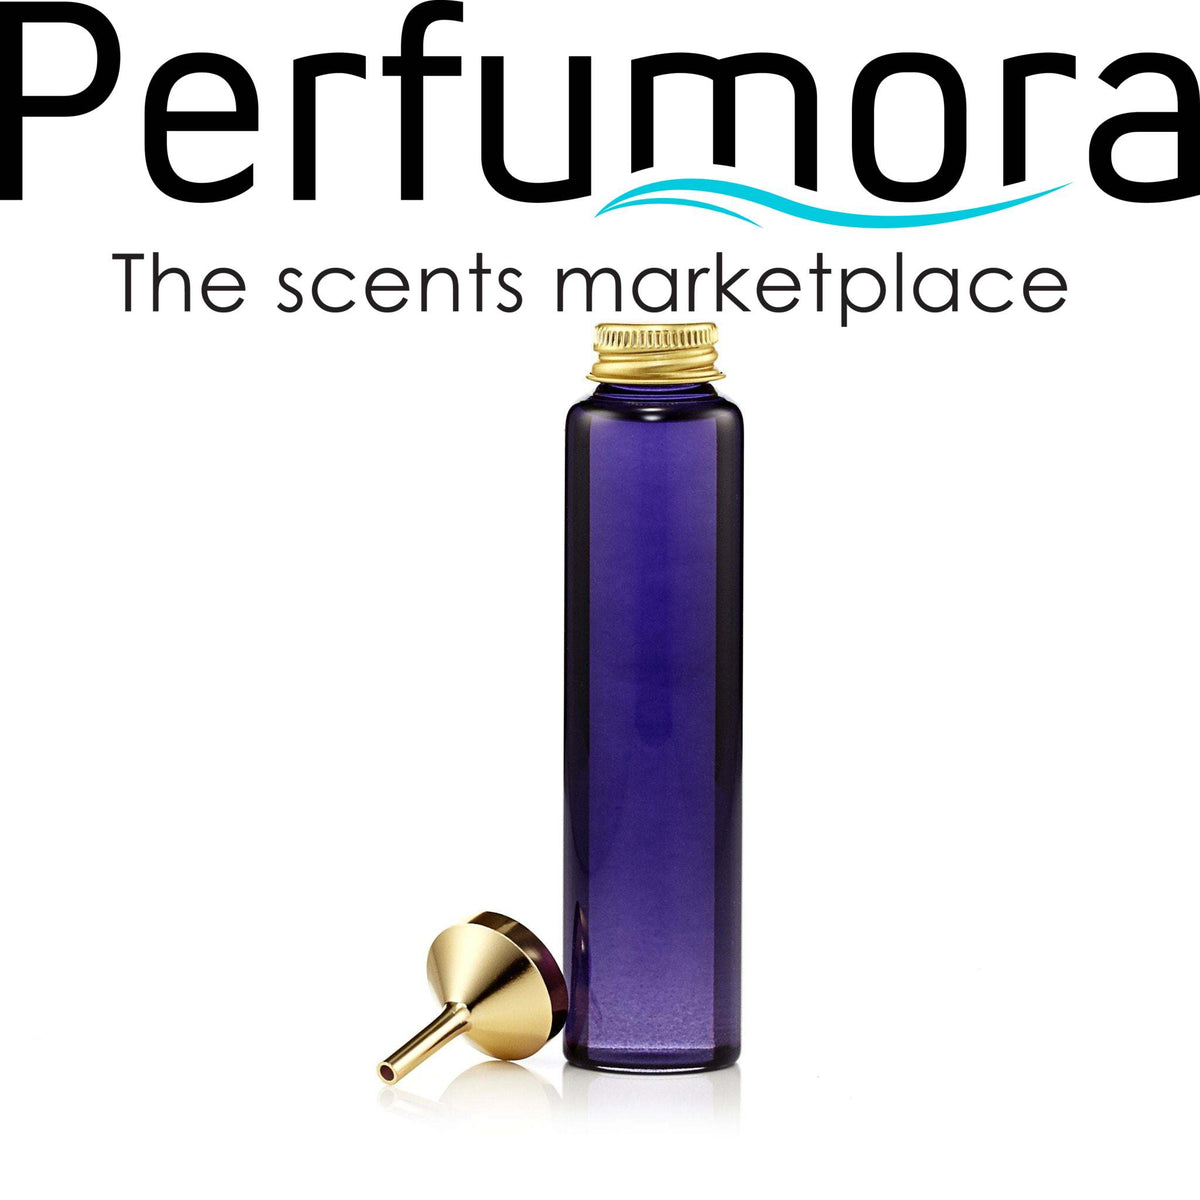 Alien Refill Bottle Eau de Parfum for Women by Thierry Mugler 2.0 oz.